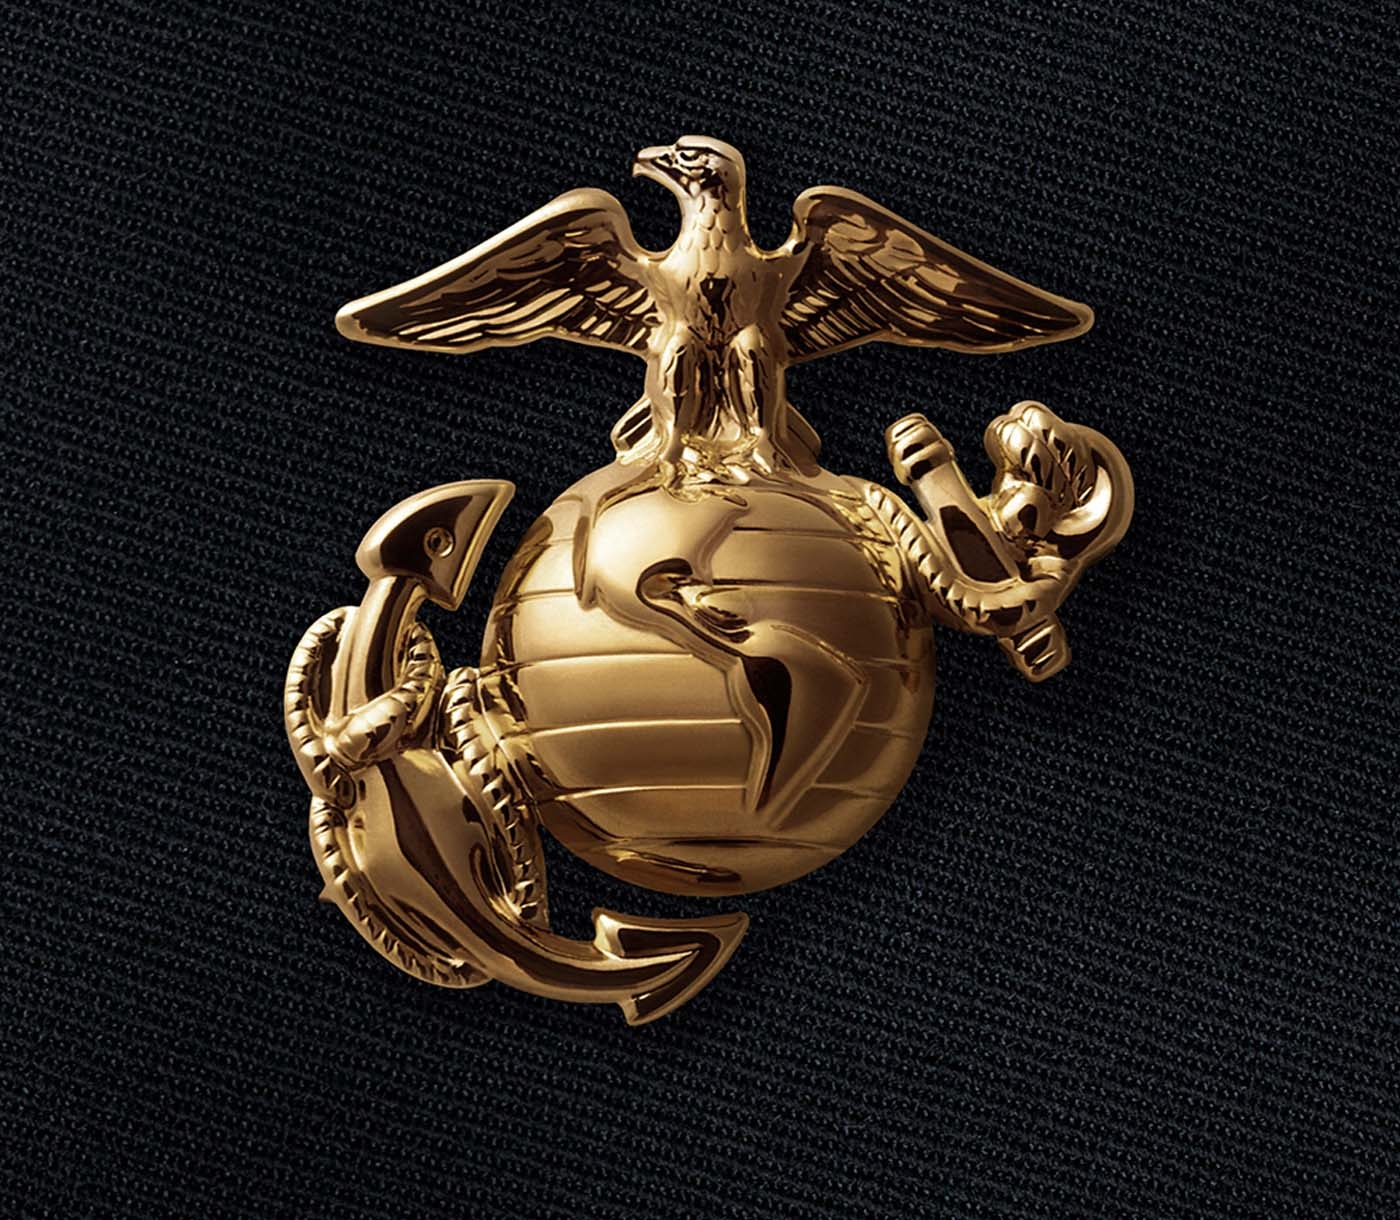 Enlisted Marines | Recruit Preparation & Training | Marines.com